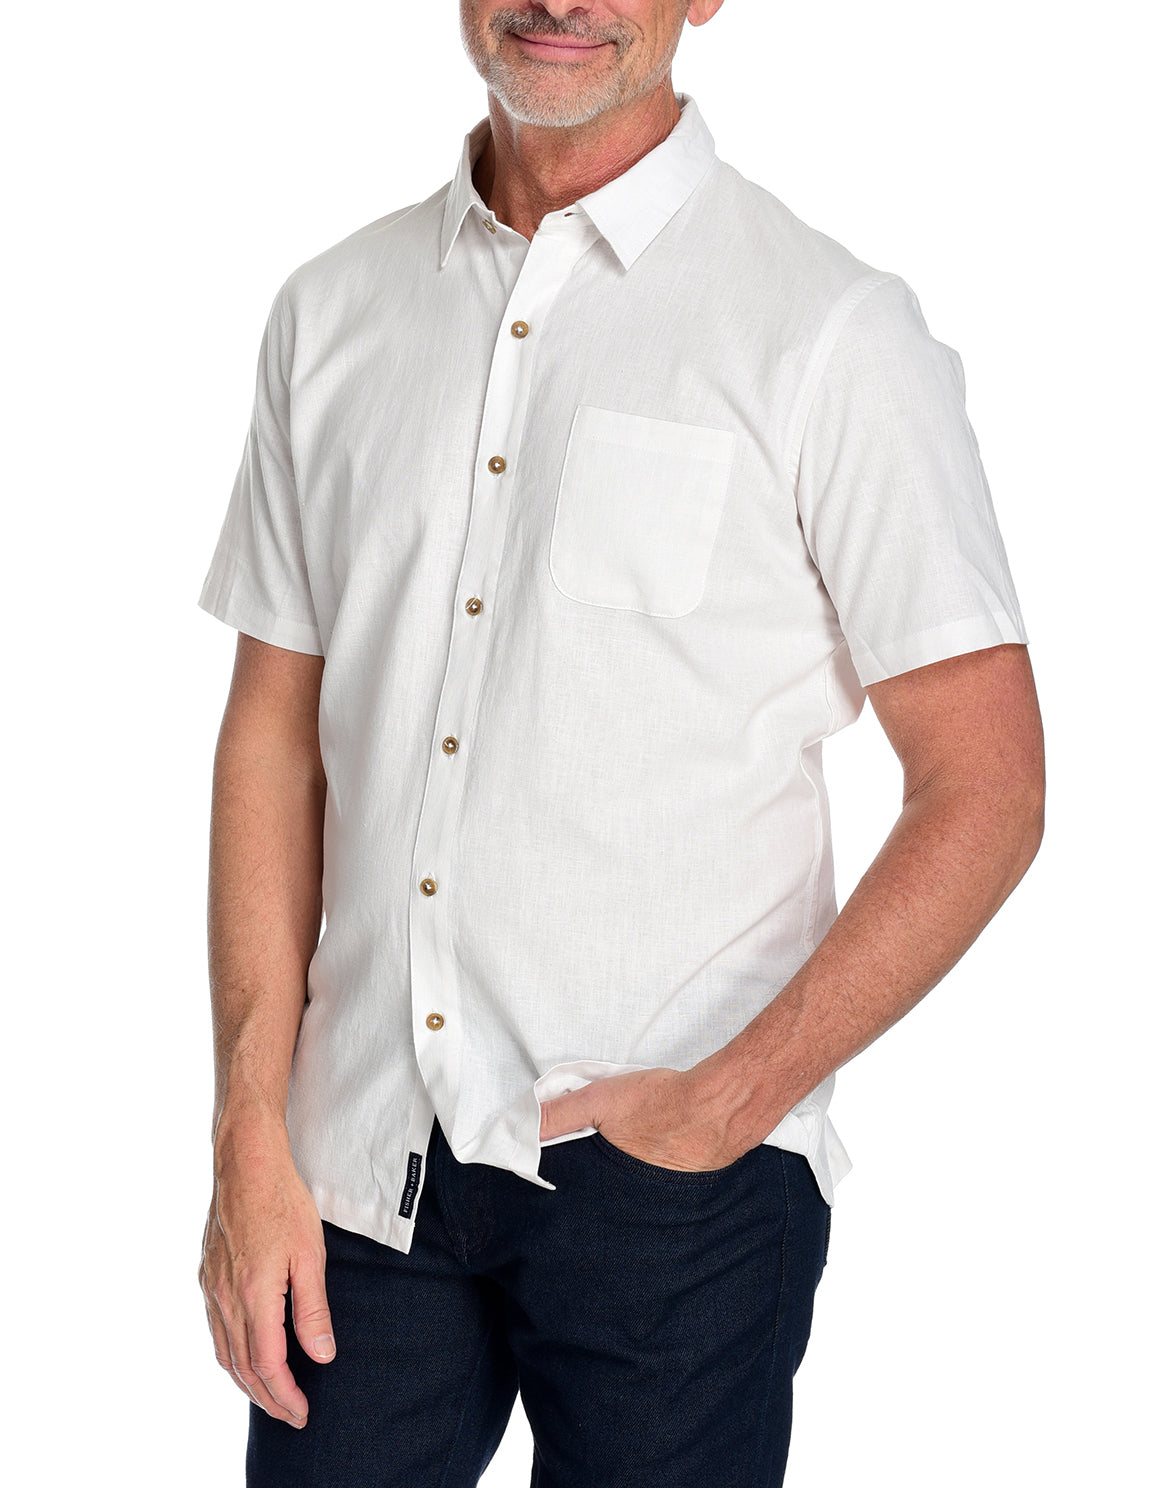 Men's Short Sleeve Shirt the Radium Shirt by Fisher + Baker White